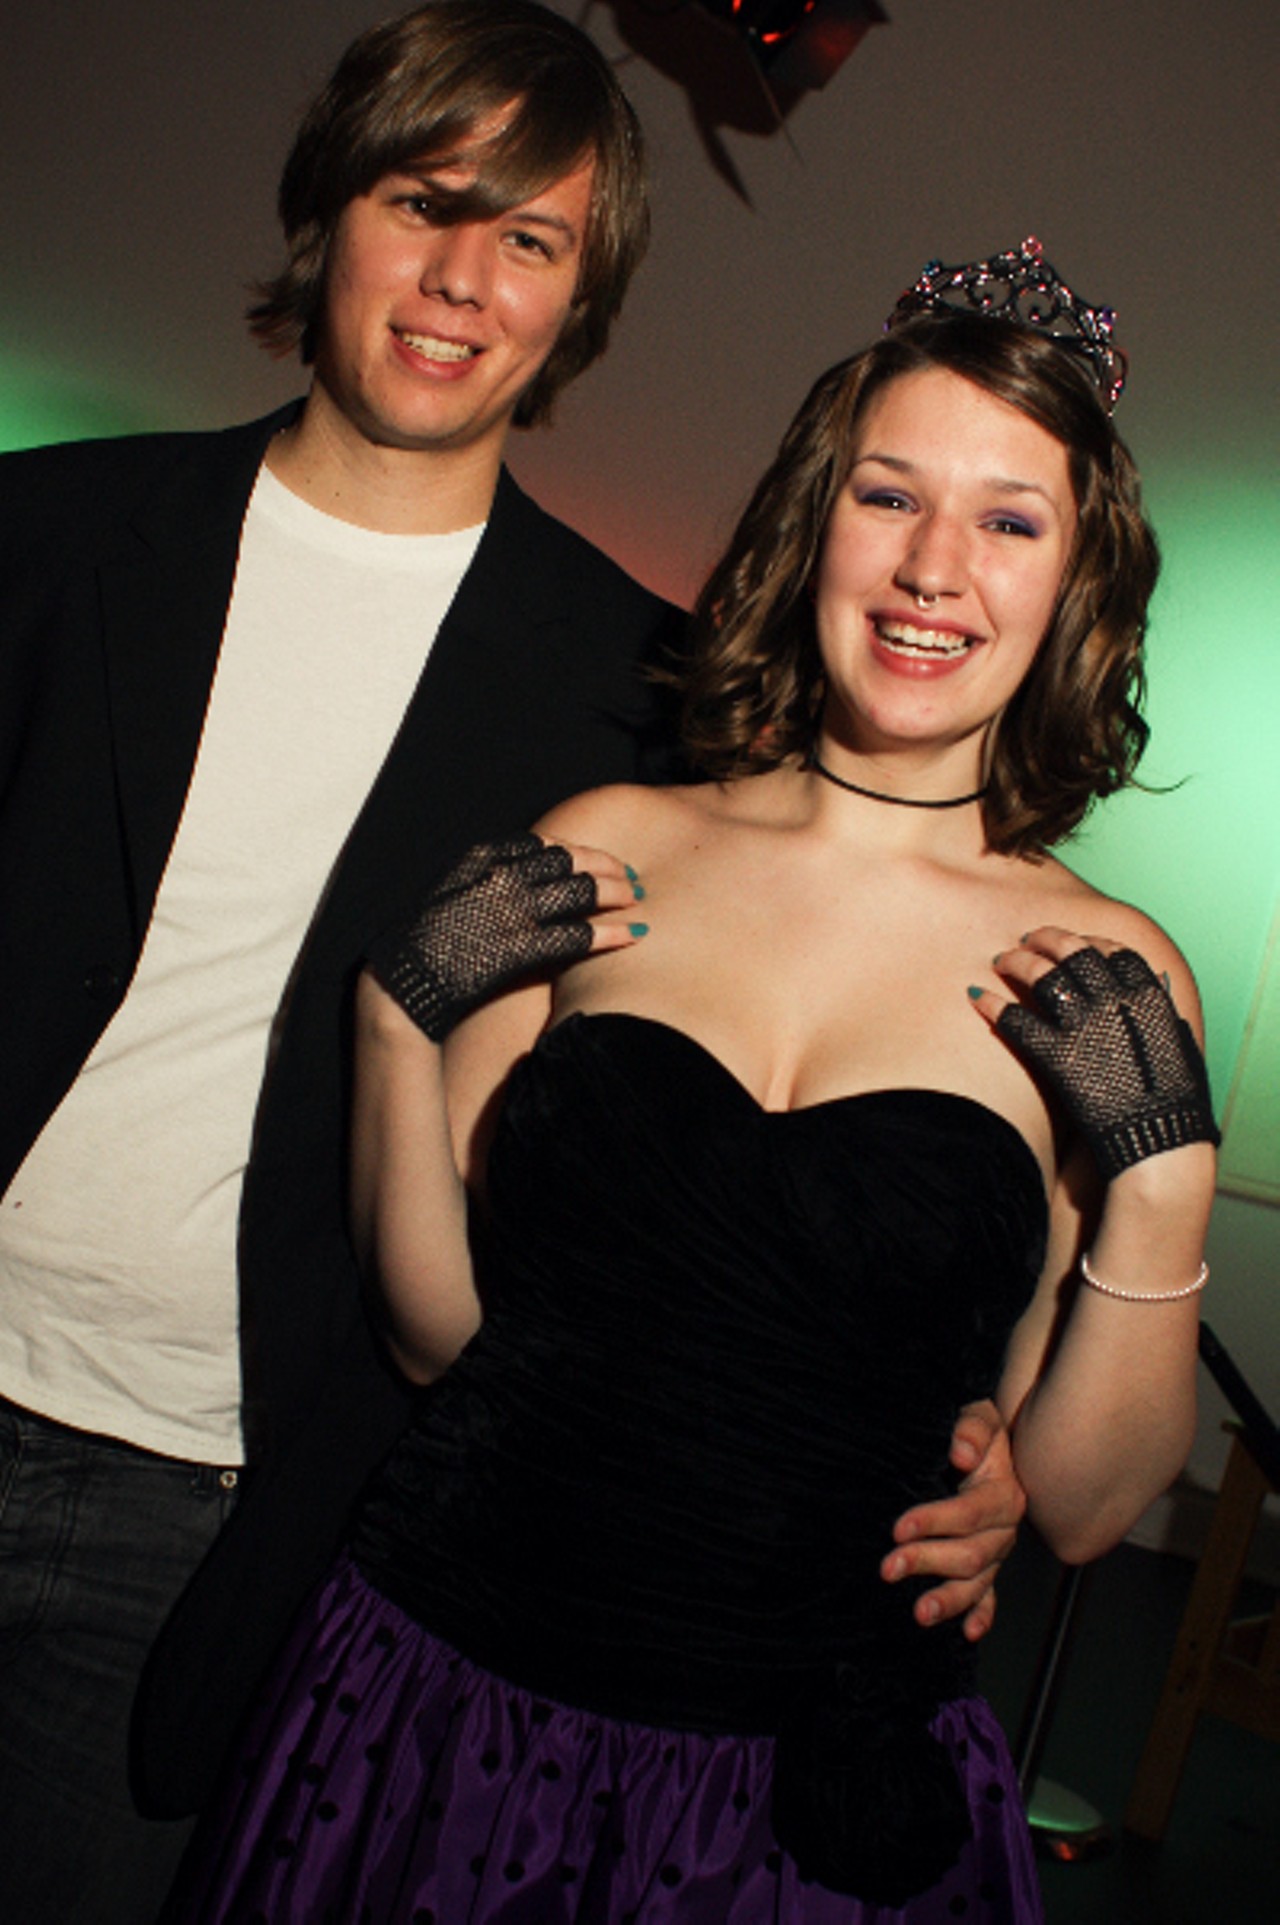 Matt Stuertz and his prom date Bridgette Flynn.